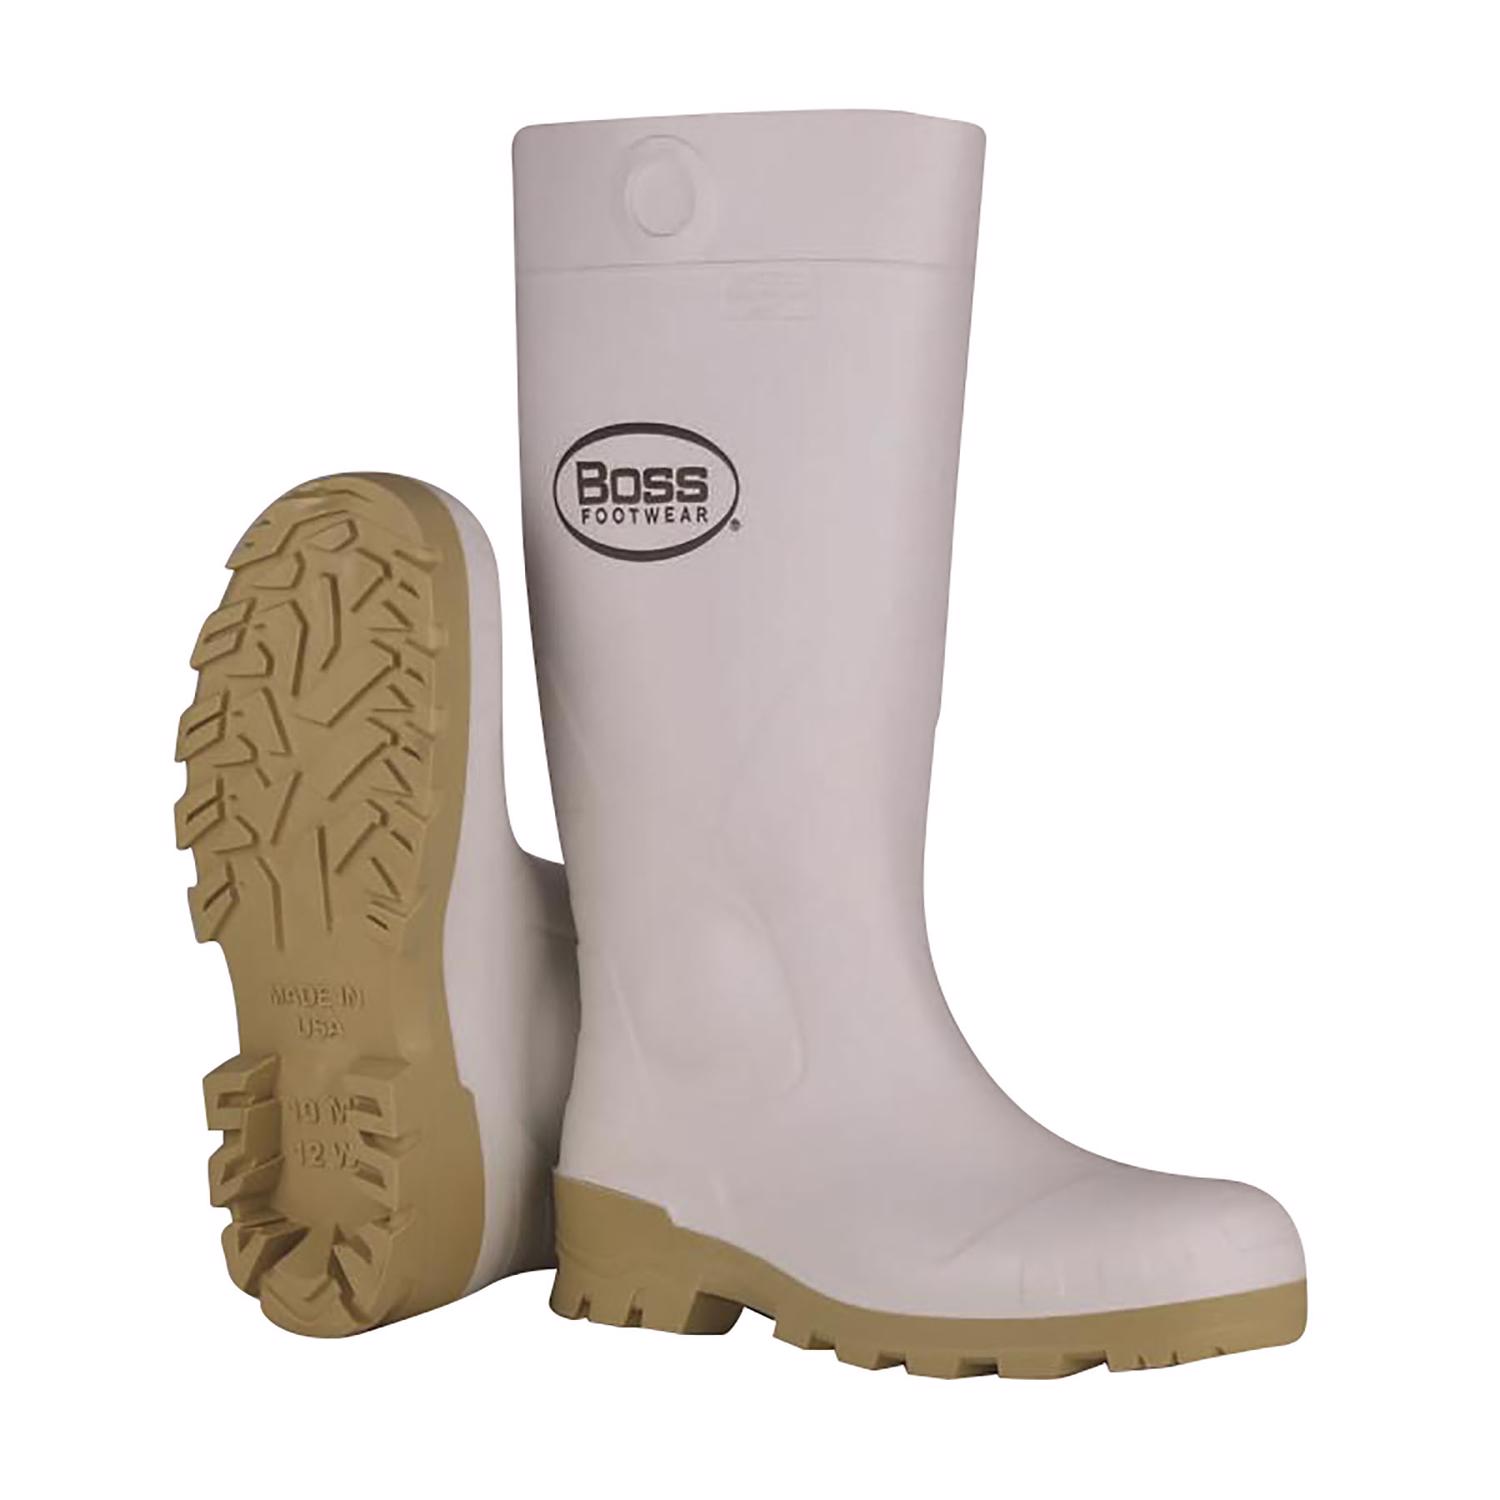 Boss Unisex PVC Plain Boots White 12 US Waterproof 1 pair 16 in